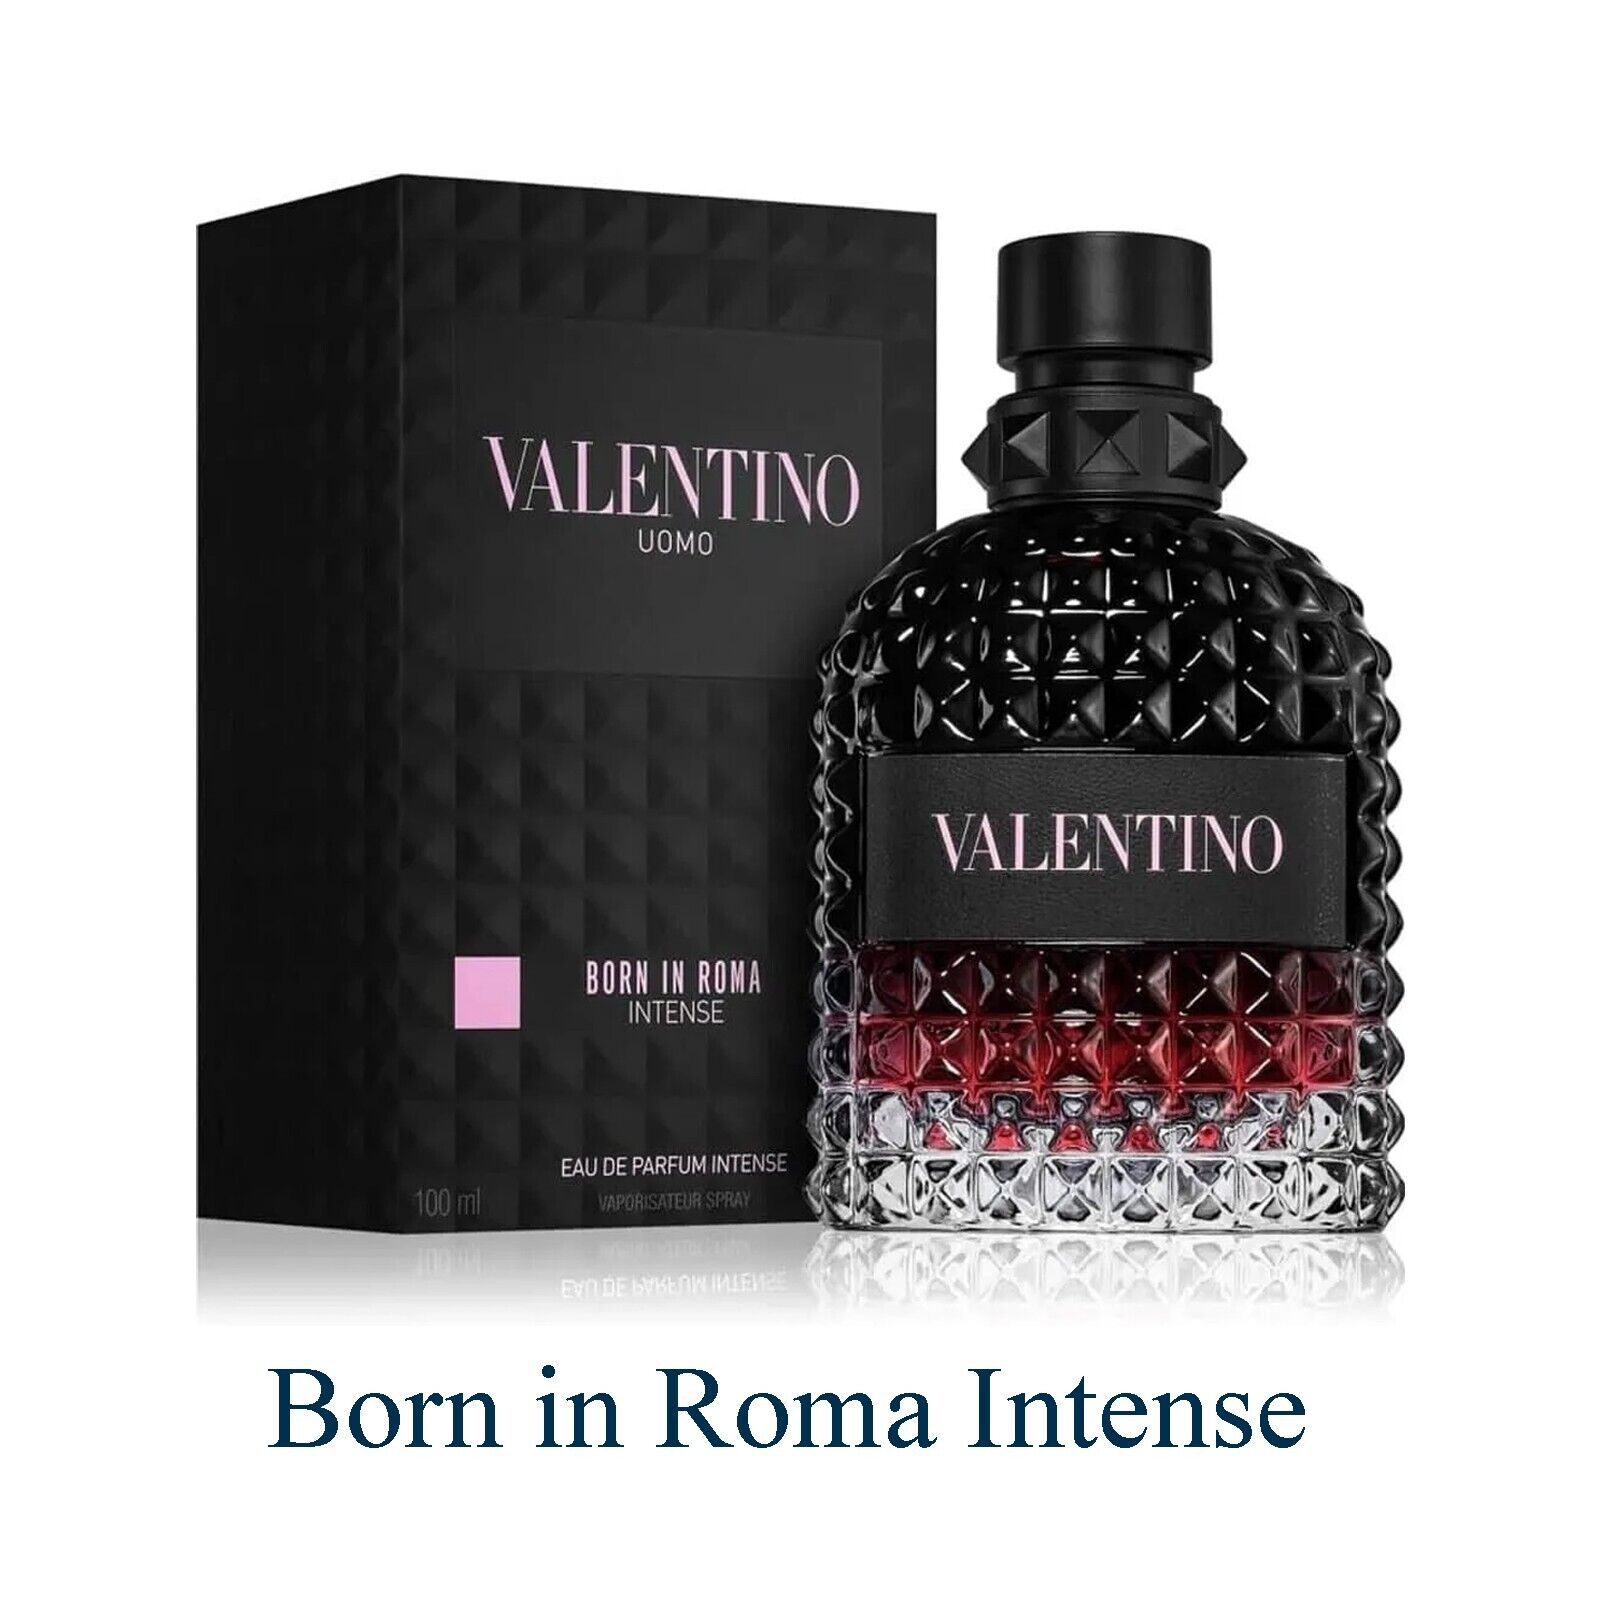 Valentino Uomo Born in Roma Intense 100ml /3.4 oz EDP Intense for Men New In Box